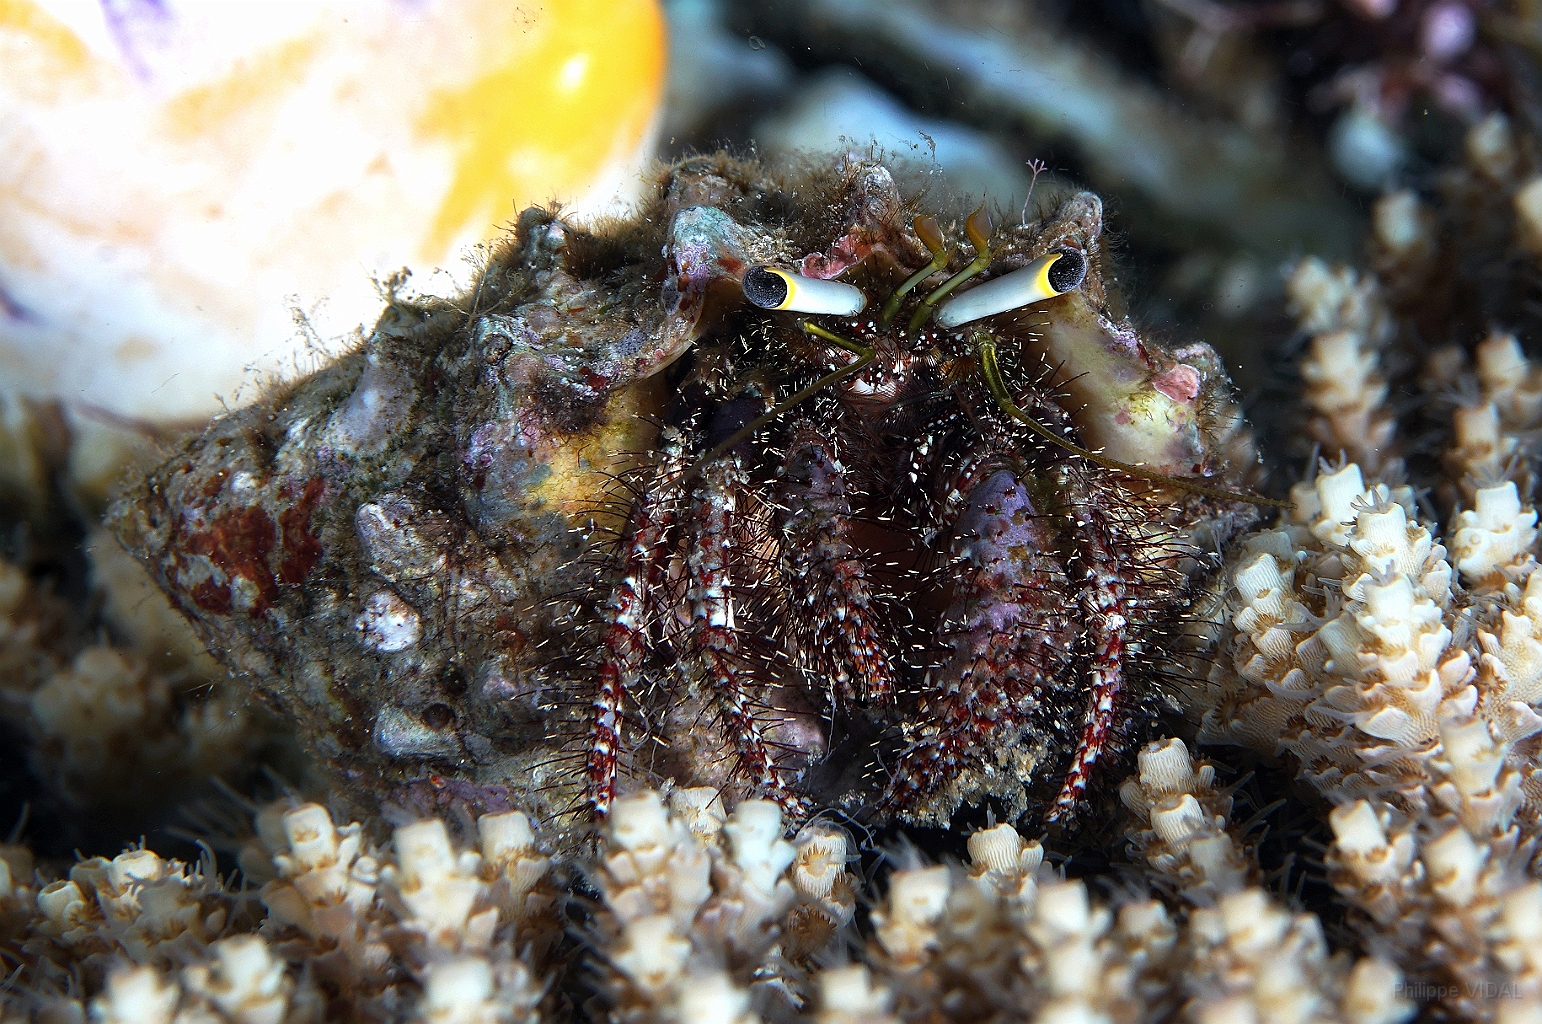 Banda Sea 2018 - DSC05927_rc - Dark knee hermit crab - Bernard lermite des recifs - Dardanus logopodes.jpg